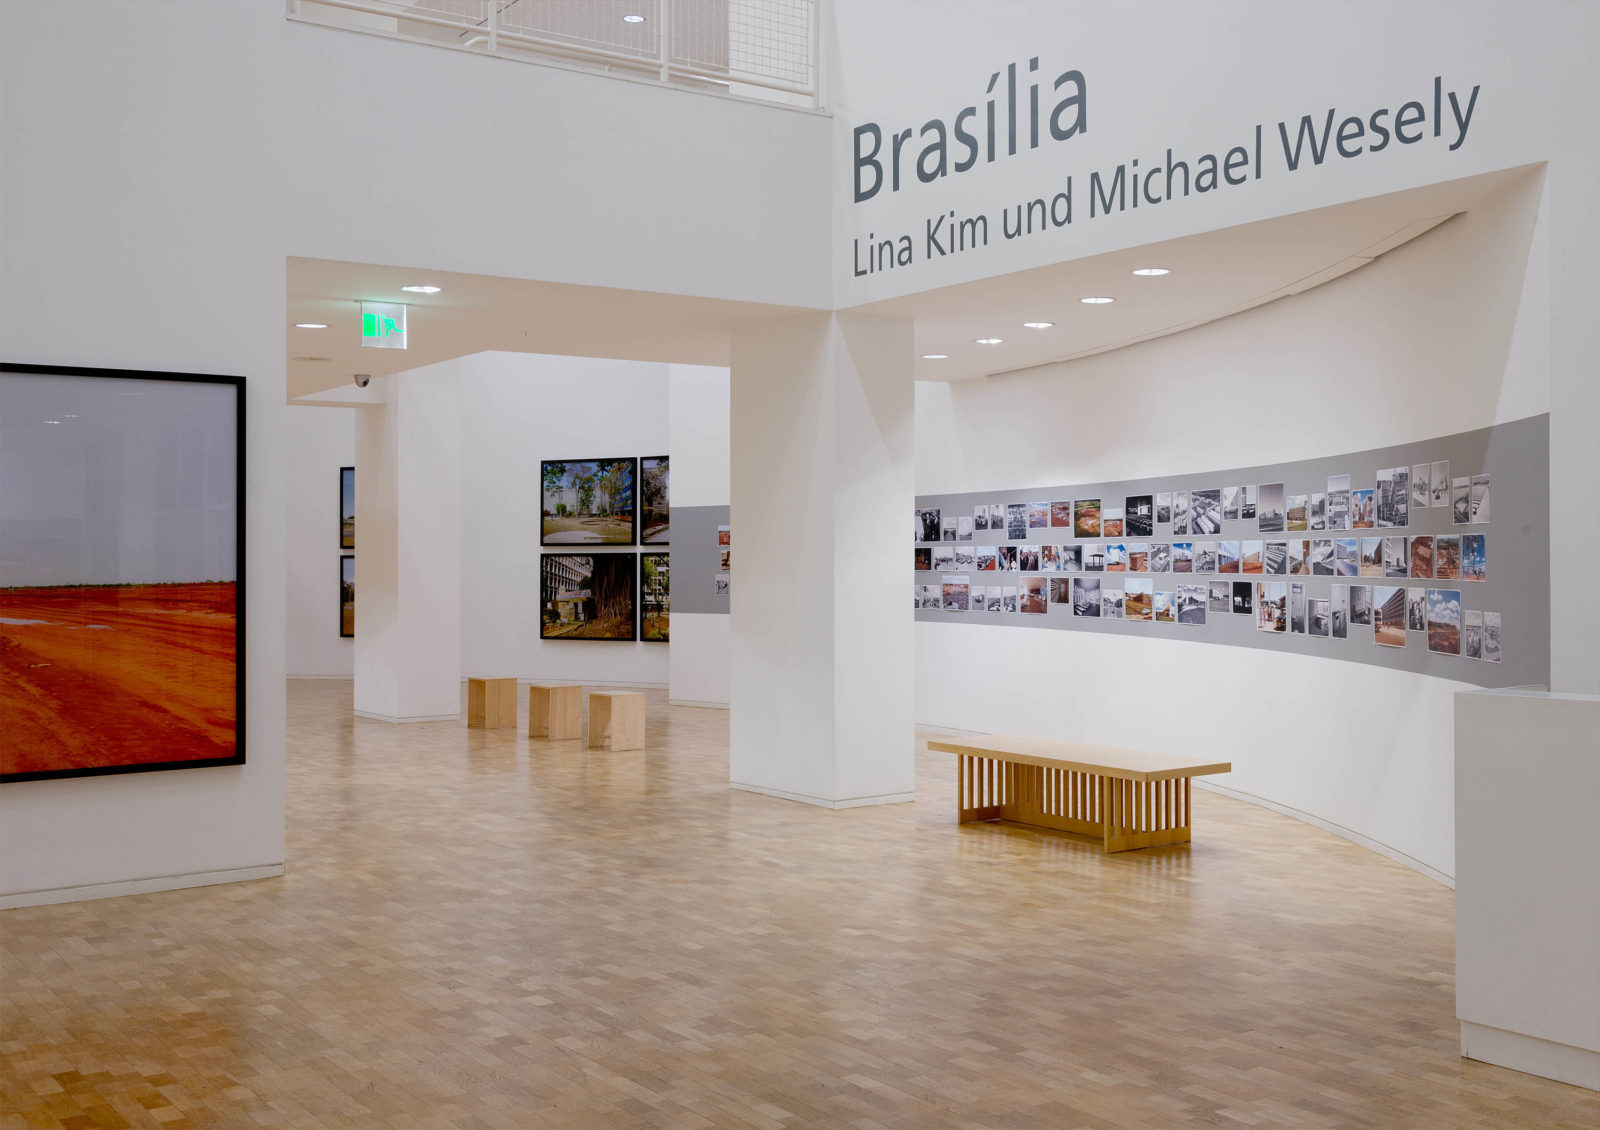 Brasilia, Lina Kim & Michael Wesely, Stadthaus Ulm